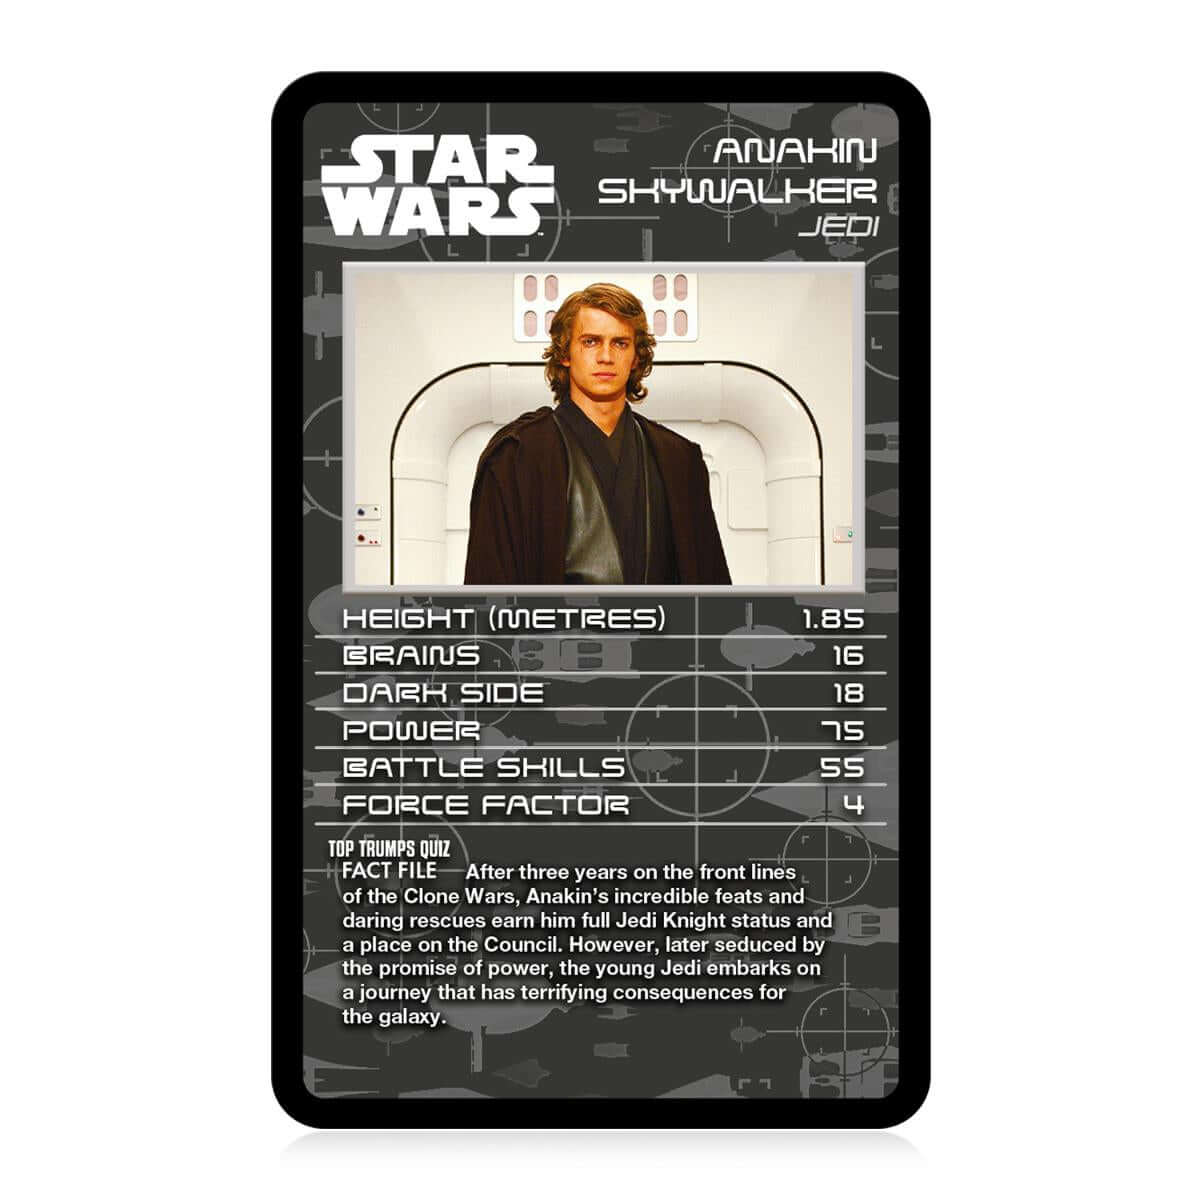 Top Trumps Star Wars Episodes 1-3 Card Game